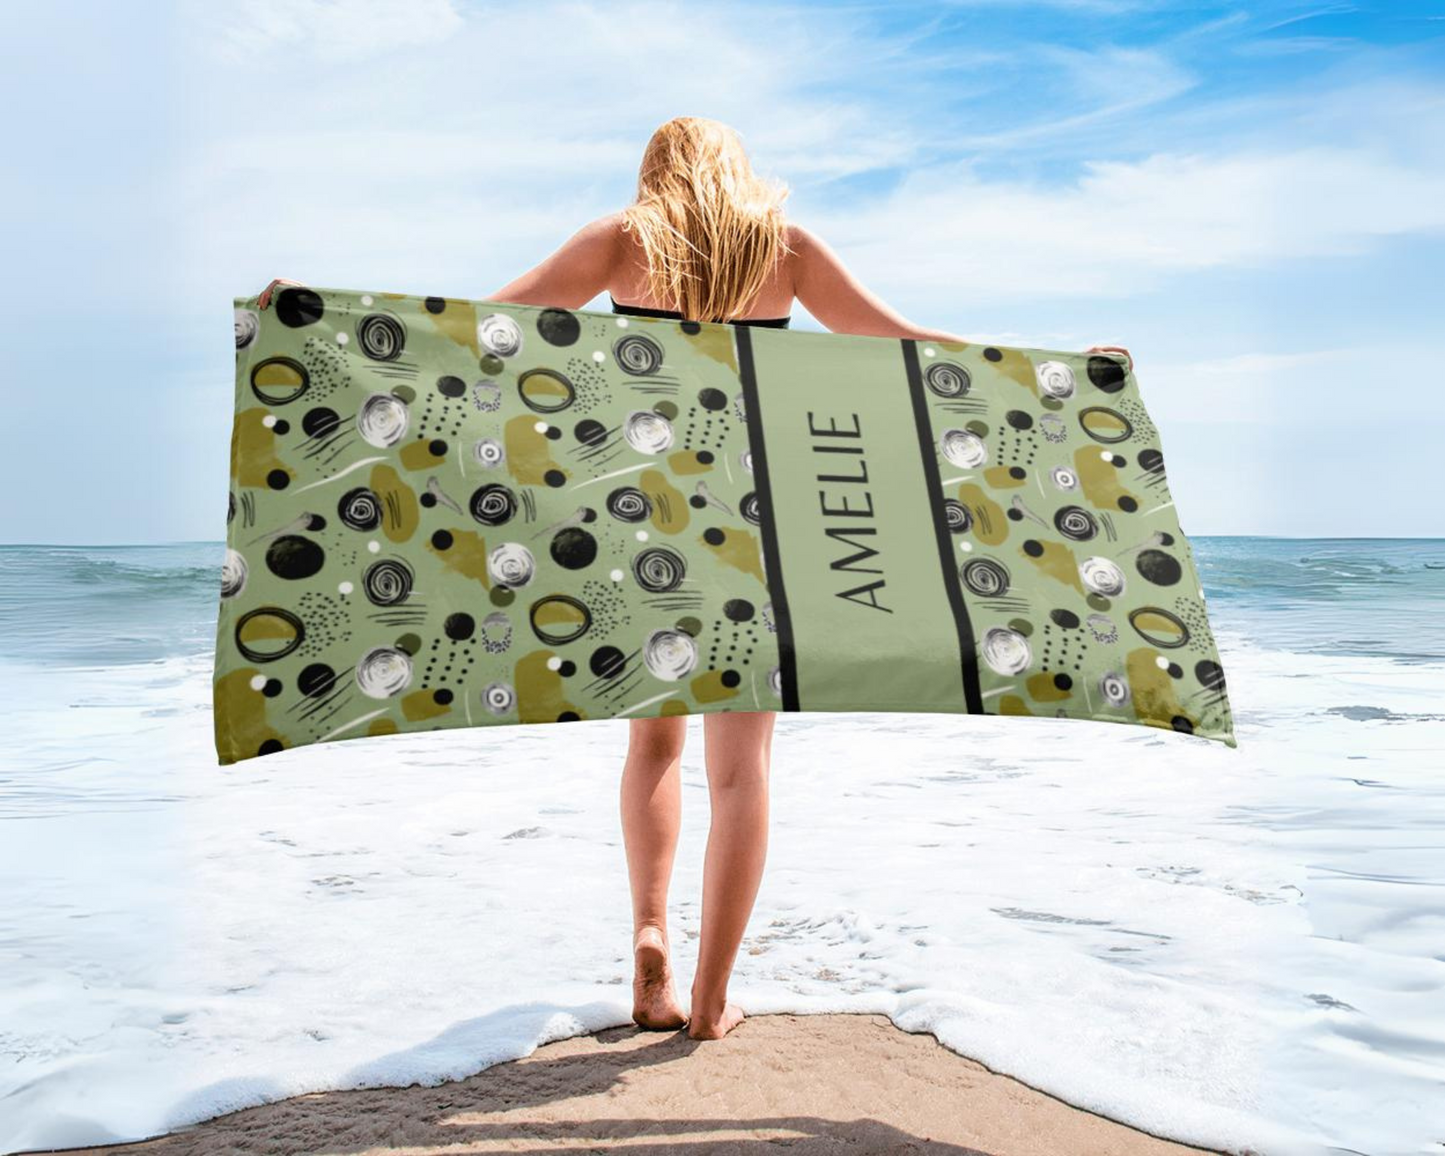 Mid Century Modern Personalized Beach Towel